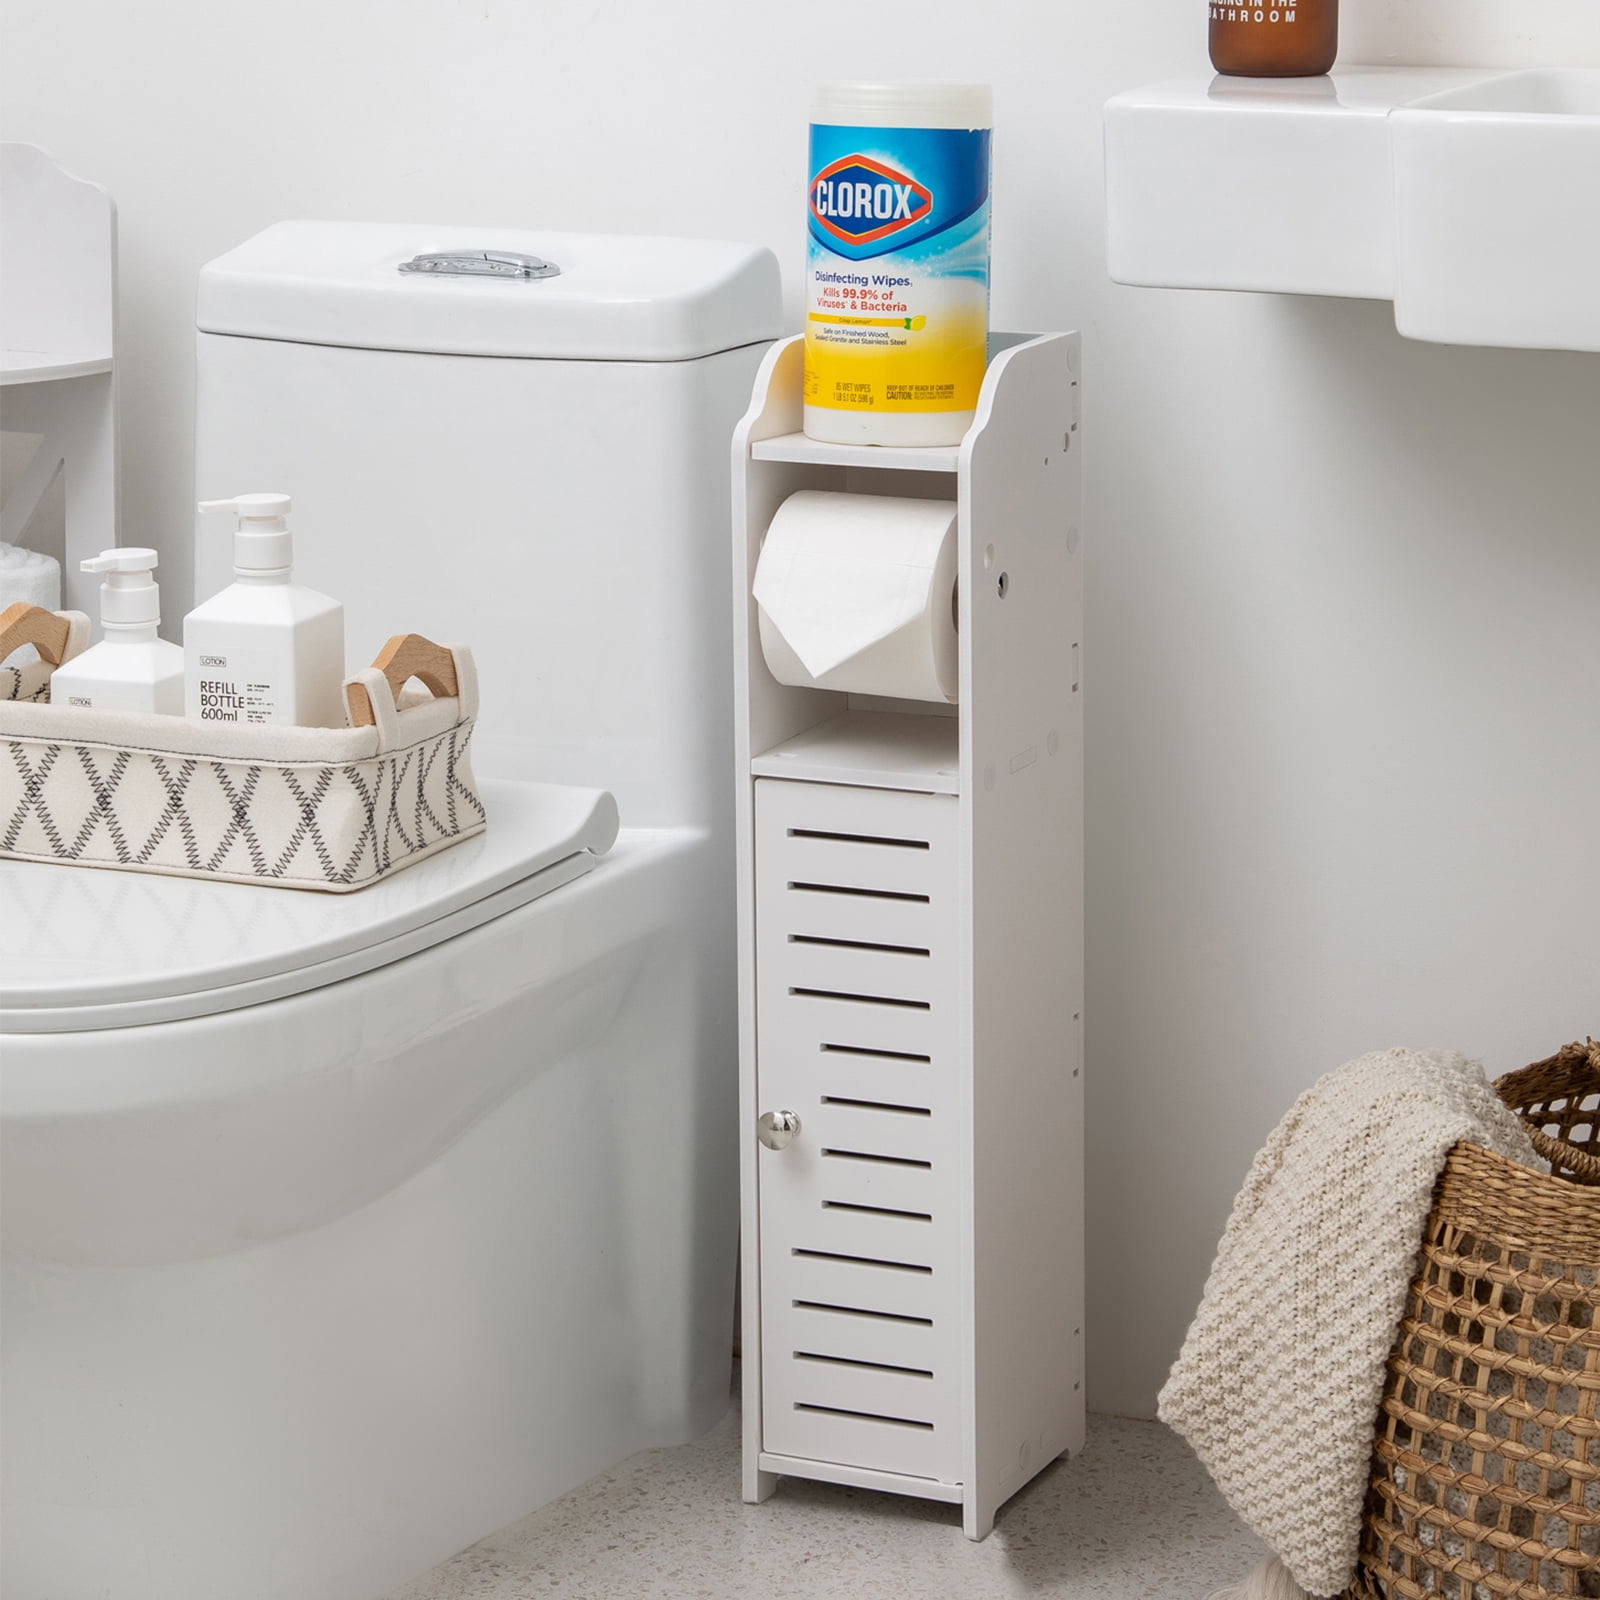 Bathroom Storage Cabinet,Chrome Toilet Paper Holder Behind Toilet ...